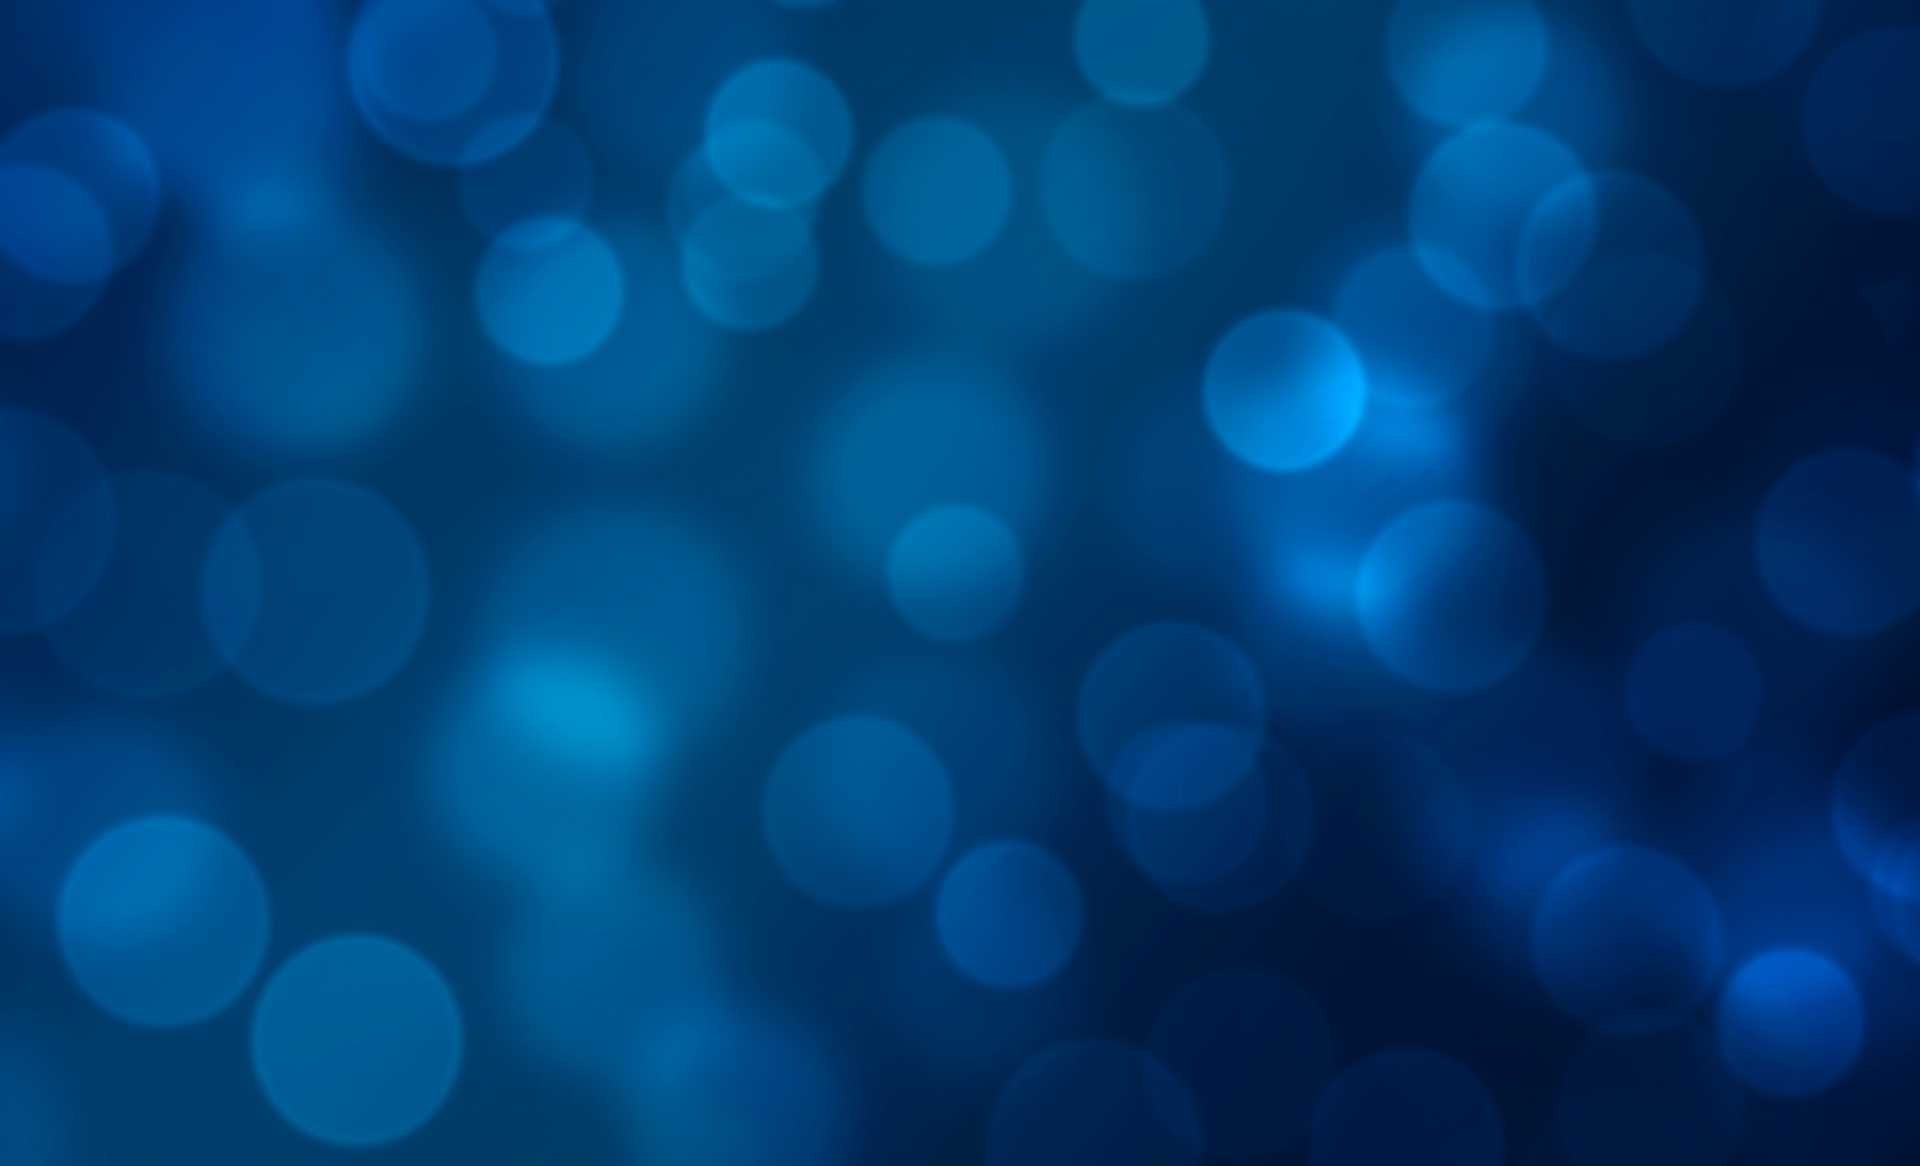 Blue sparkly background